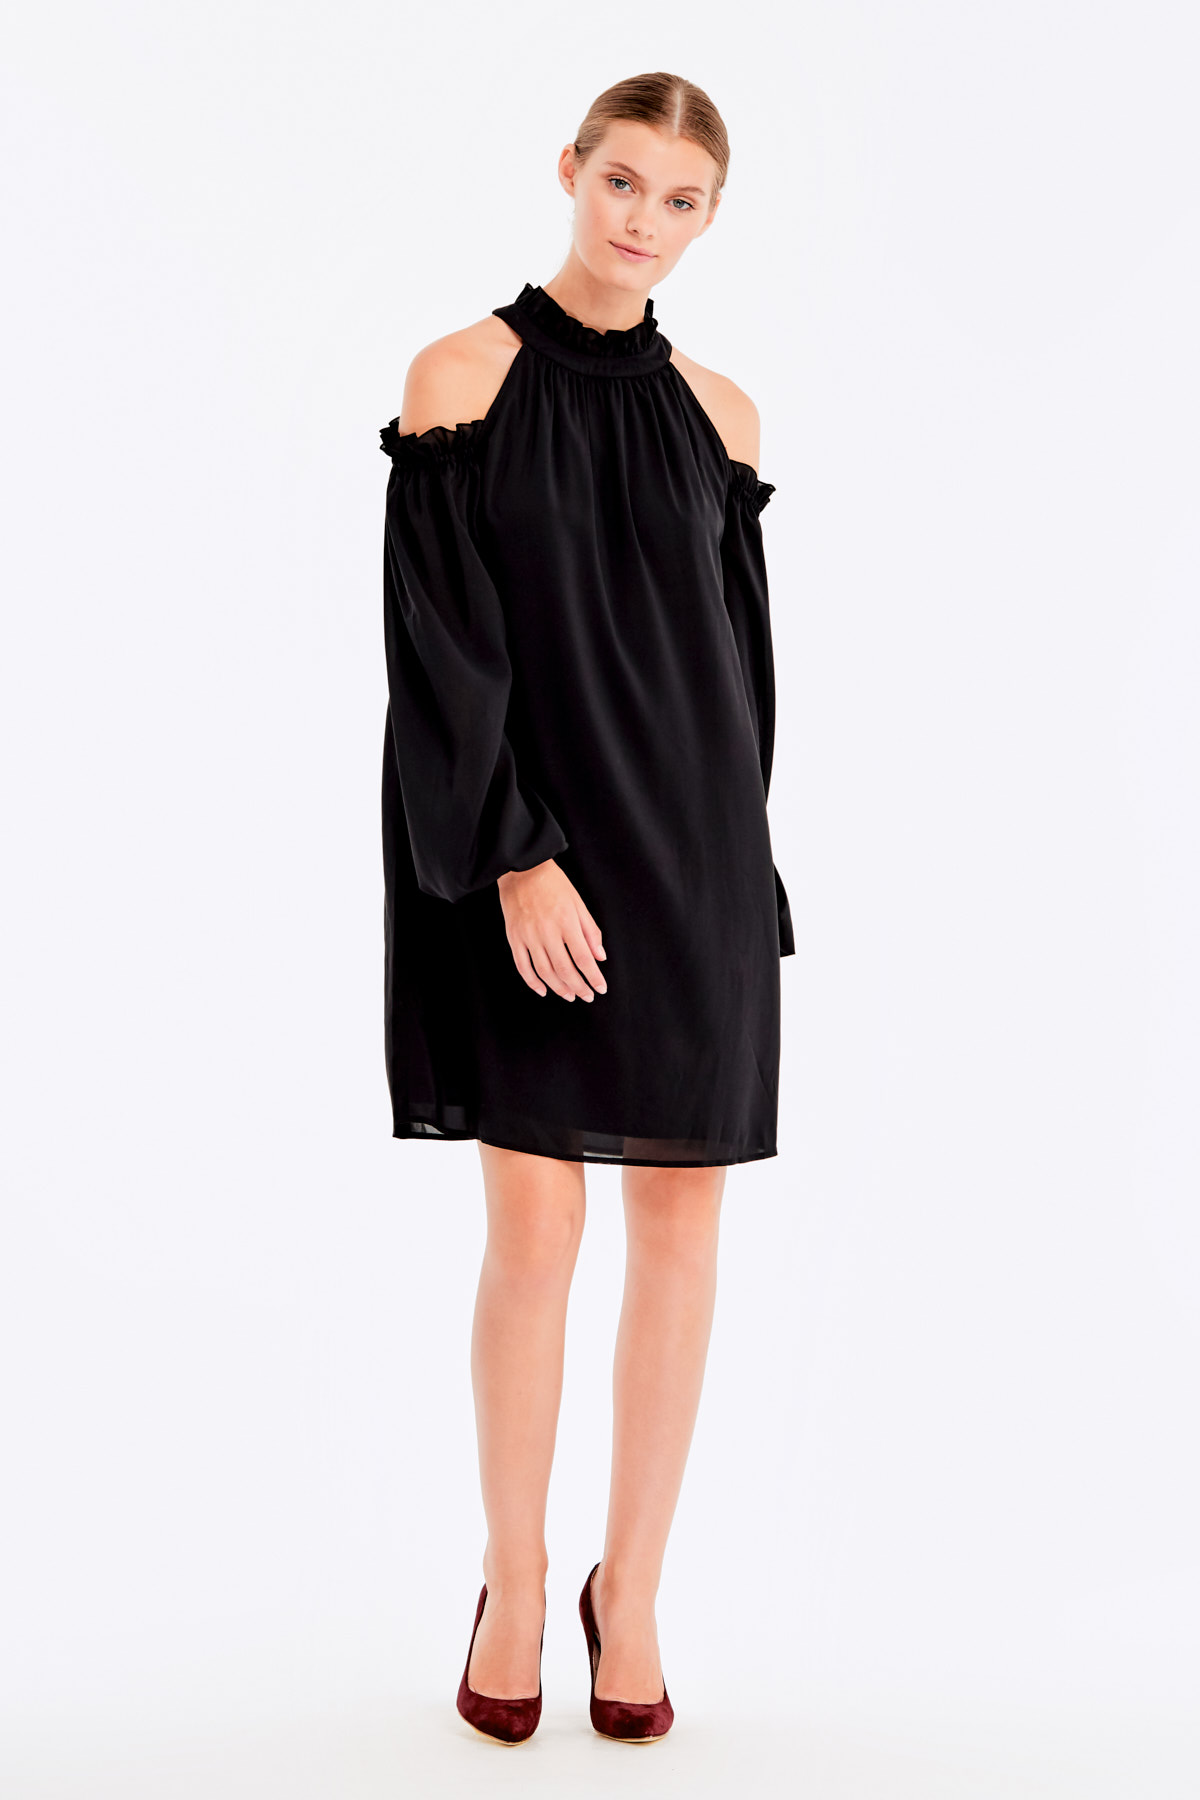 Open shoulder black chiffon dress, photo 4